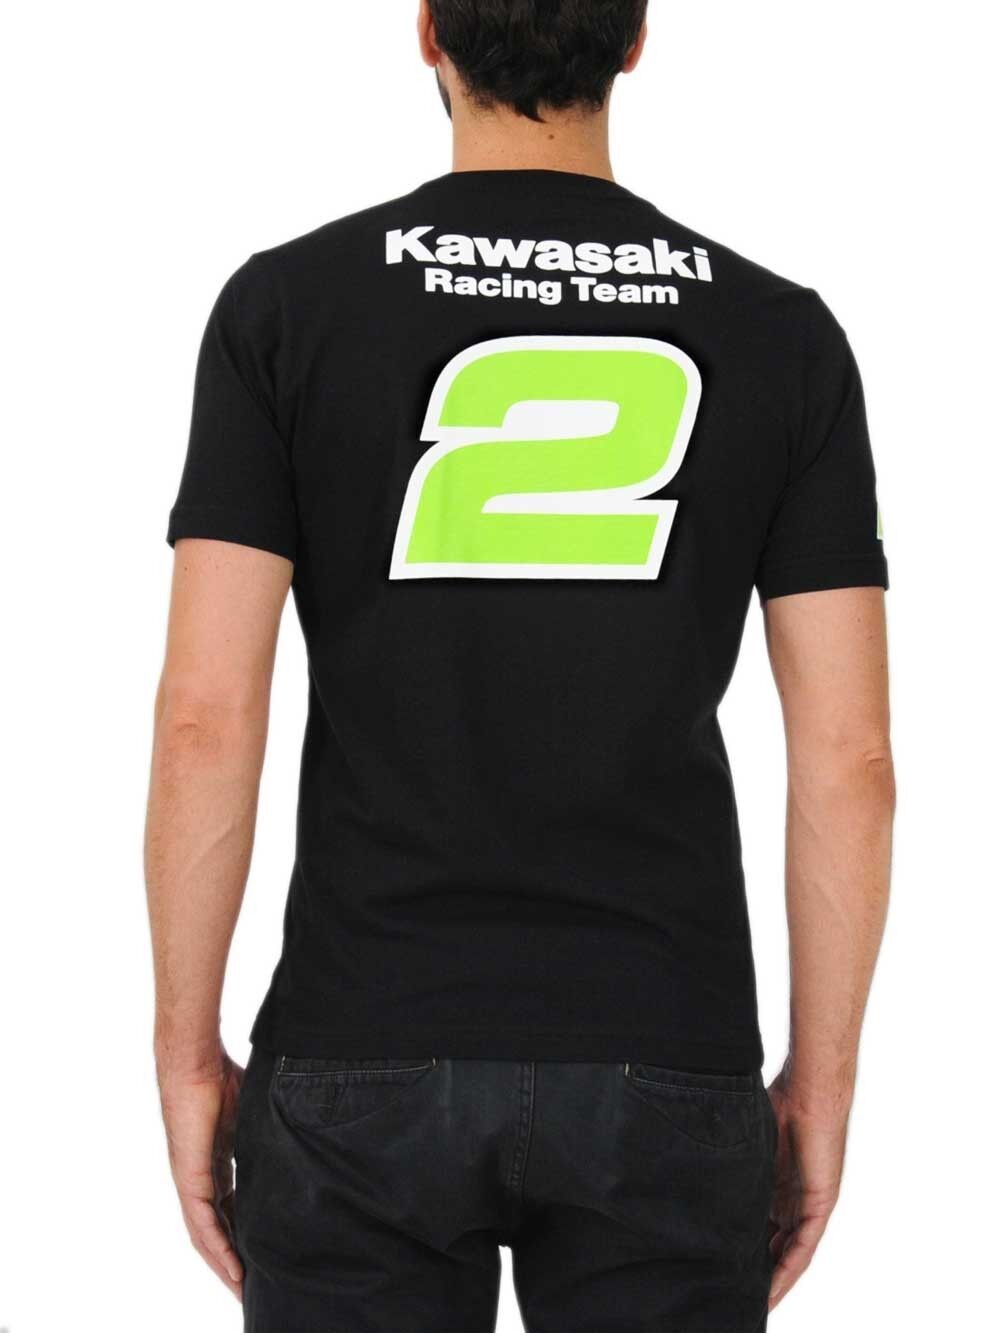 New Official Kawasaki Racing Team T'Shirt Ryan Vilopoto - 15 31531